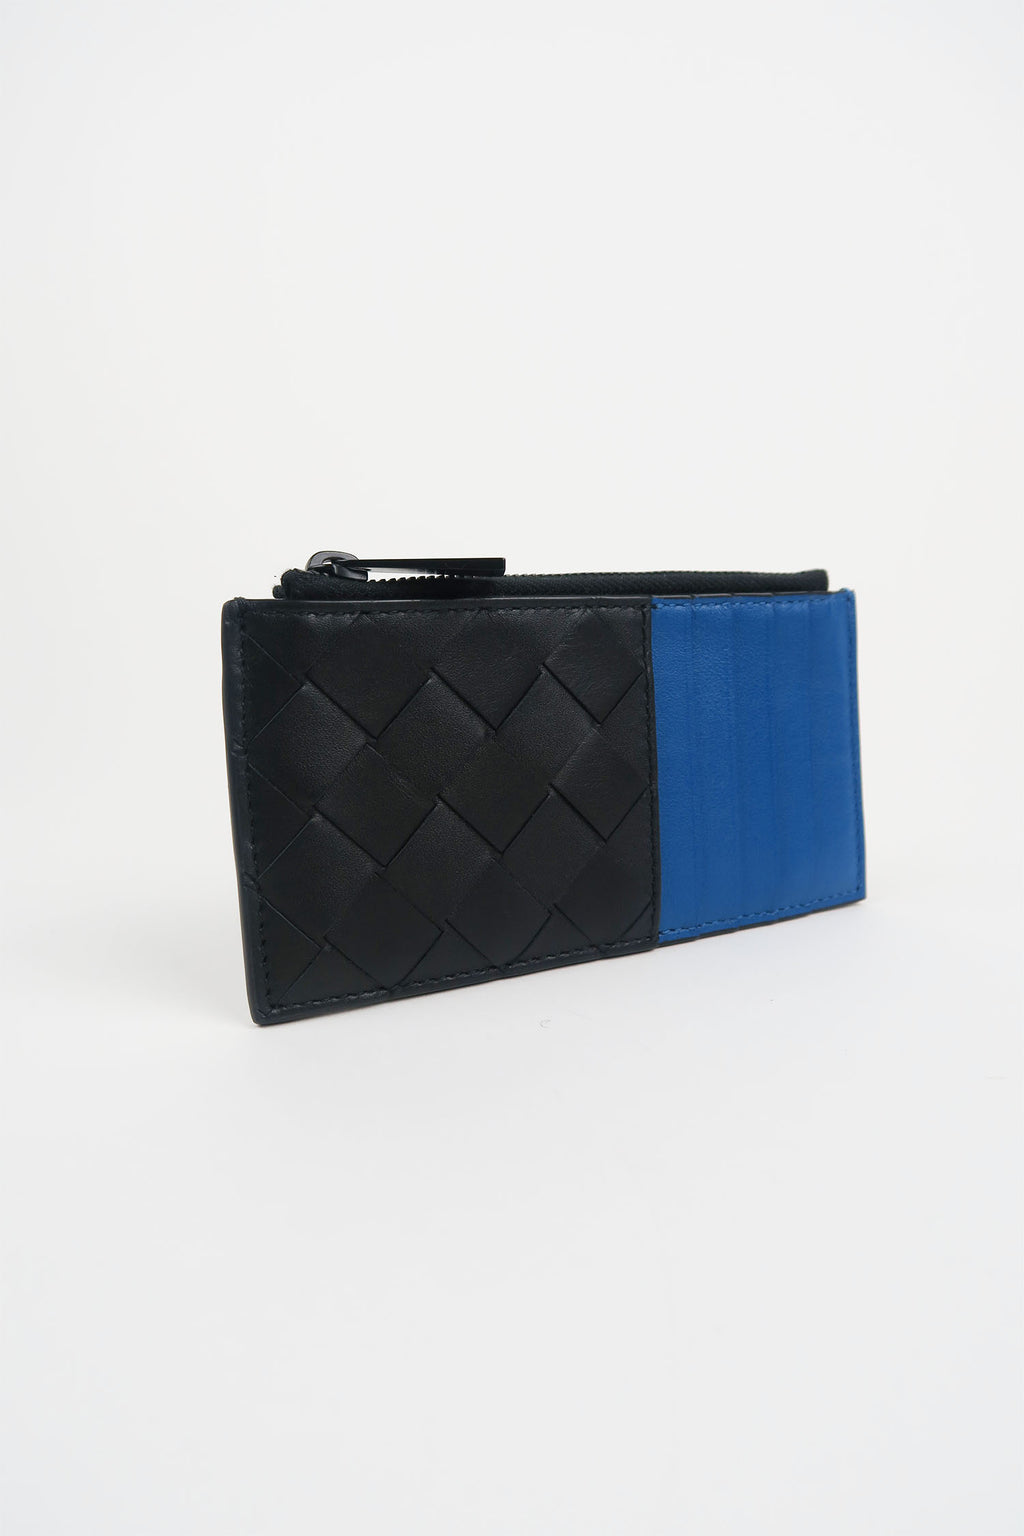 Bottega Veneta Black/Blue Intrecciato Zipper Card Holder